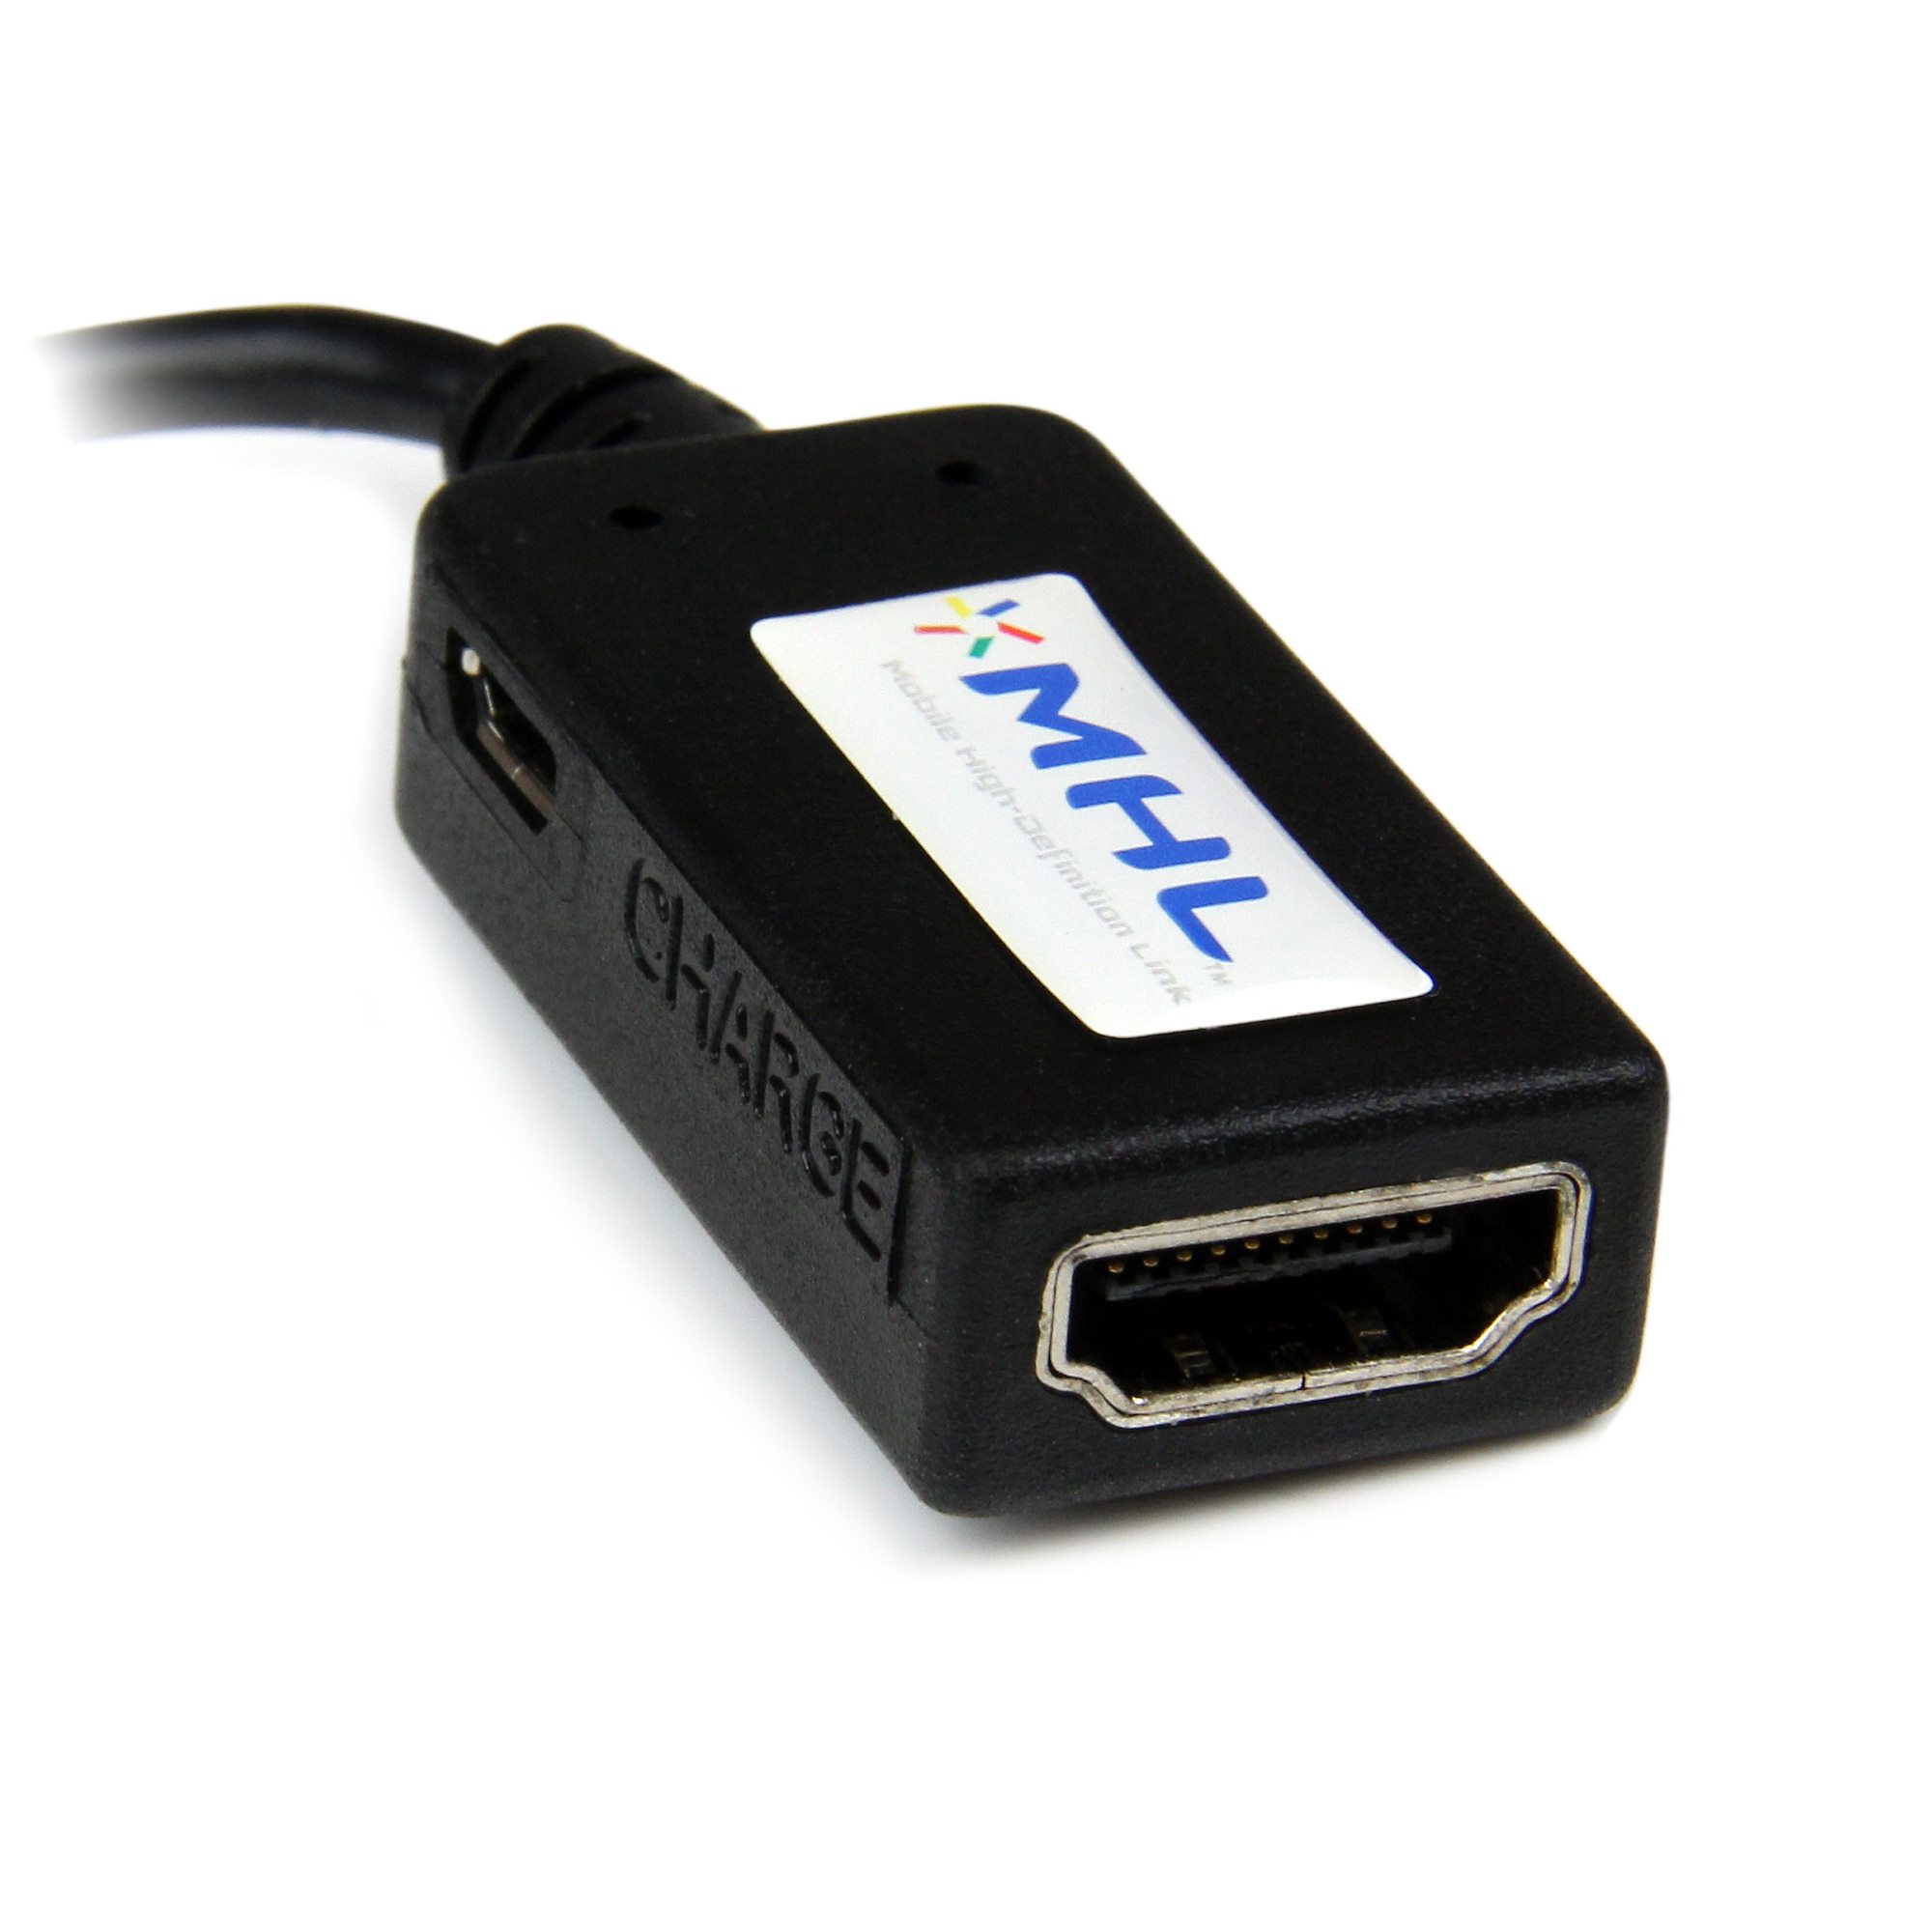  Adaptador micro USB a HDMI, adaptador de teléfono Android a TV  HD, resolución súper alta hasta 1080P y sonido estéreo de 8 canales,  transmisión de señal estable, W : Electrónica